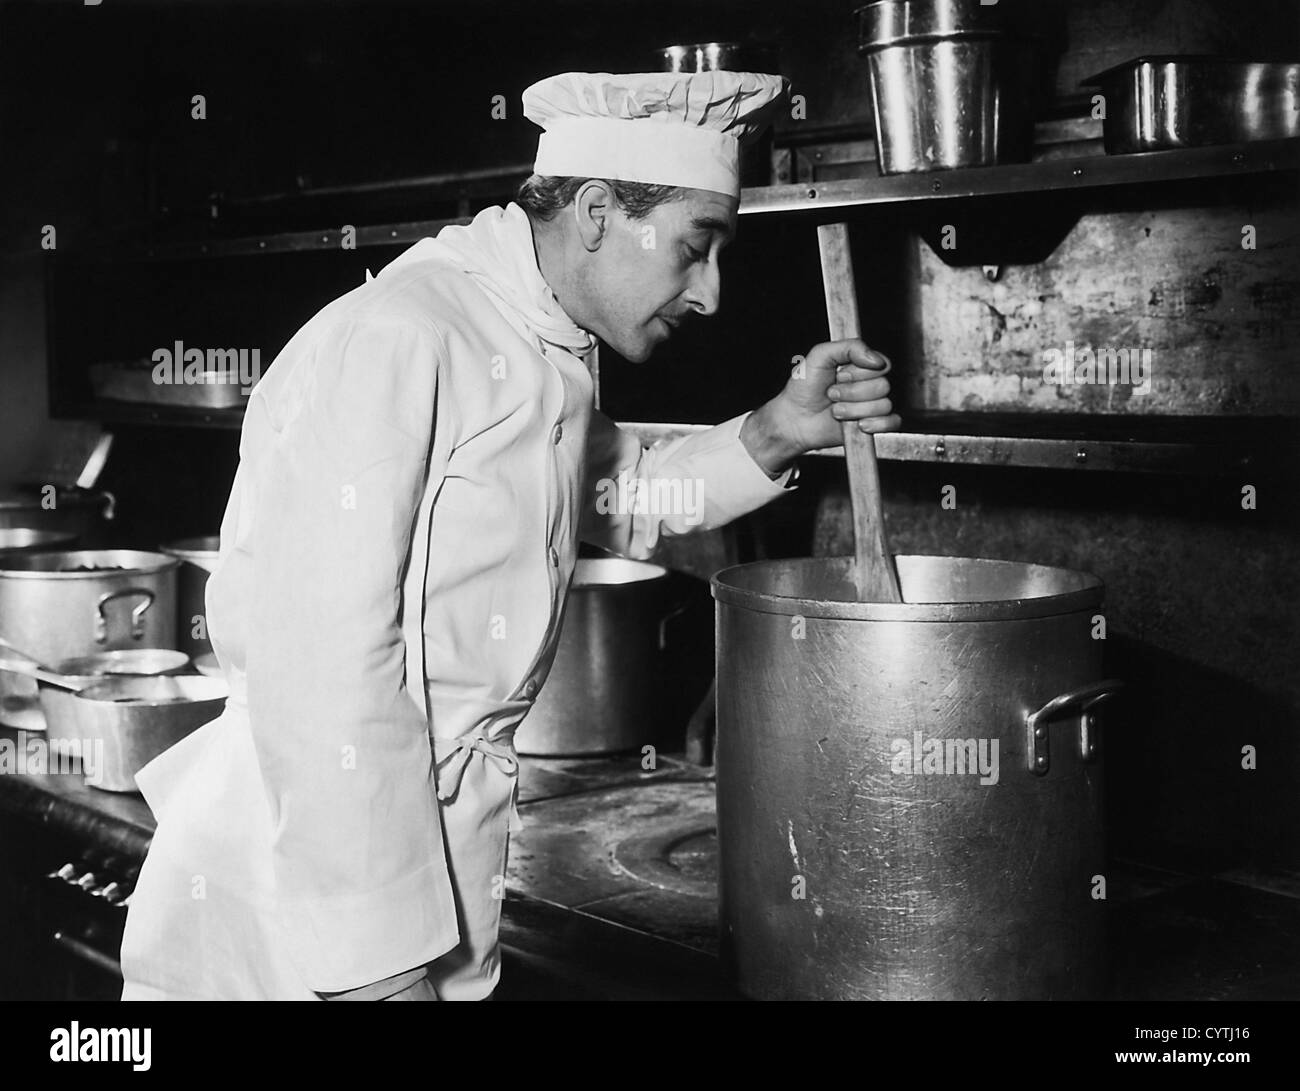 https://c8.alamy.com/comp/CYTJ16/chef-stirring-soup-in-large-pot-on-stove-CYTJ16.jpg